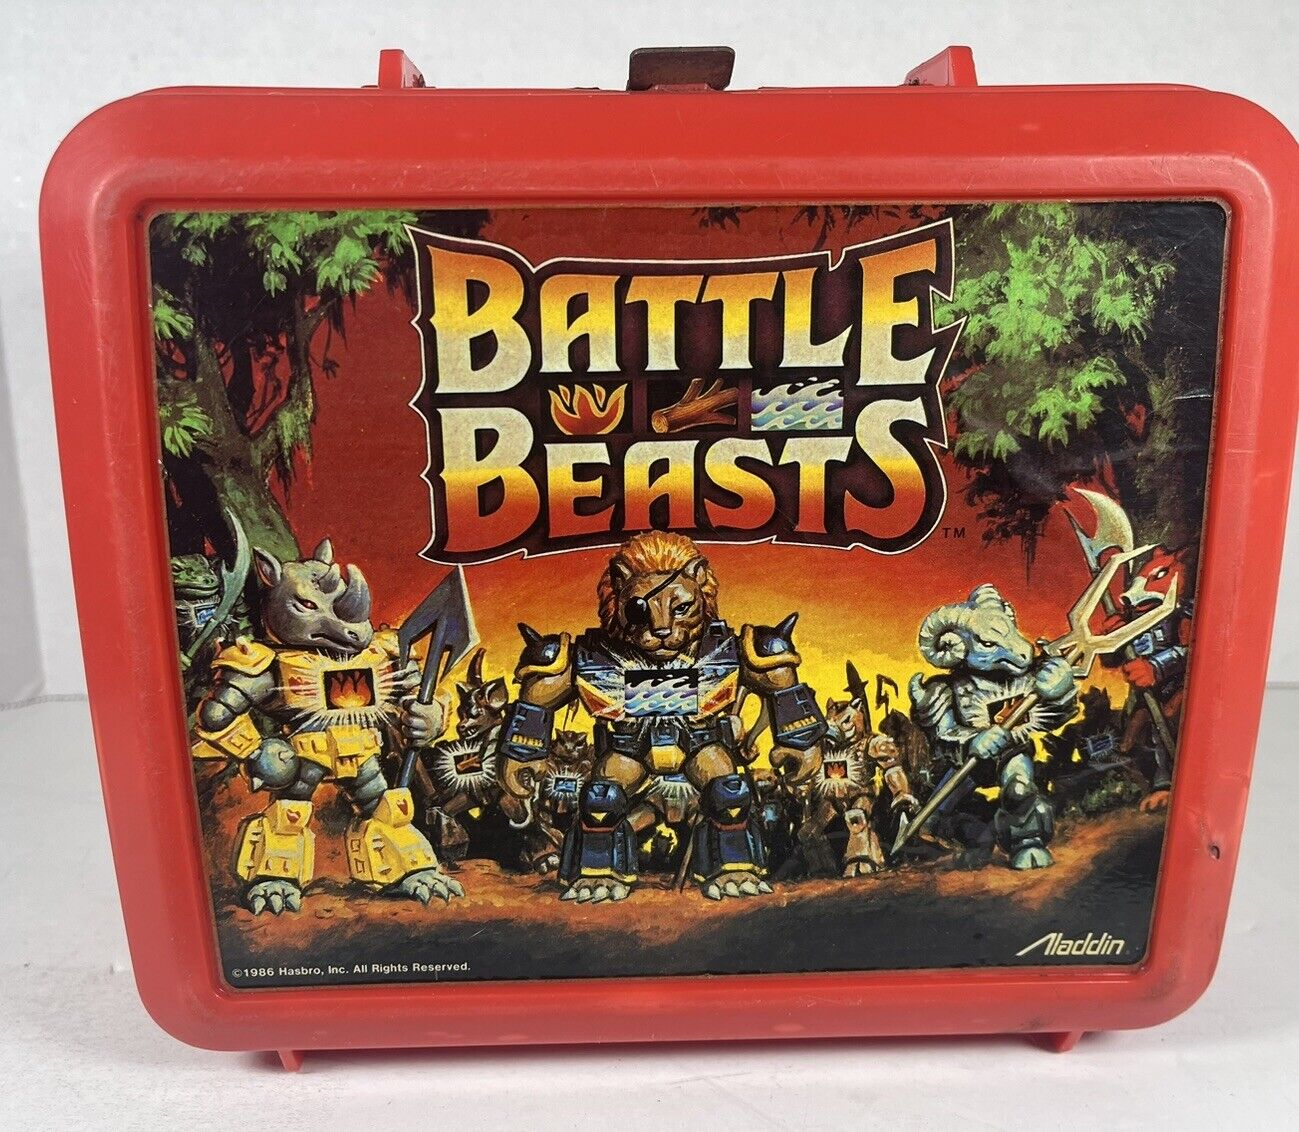 Vintage 1980s Aladdin Battle Beasts Plastic Lunch Box No Thermos 1986 Hasbro Inc